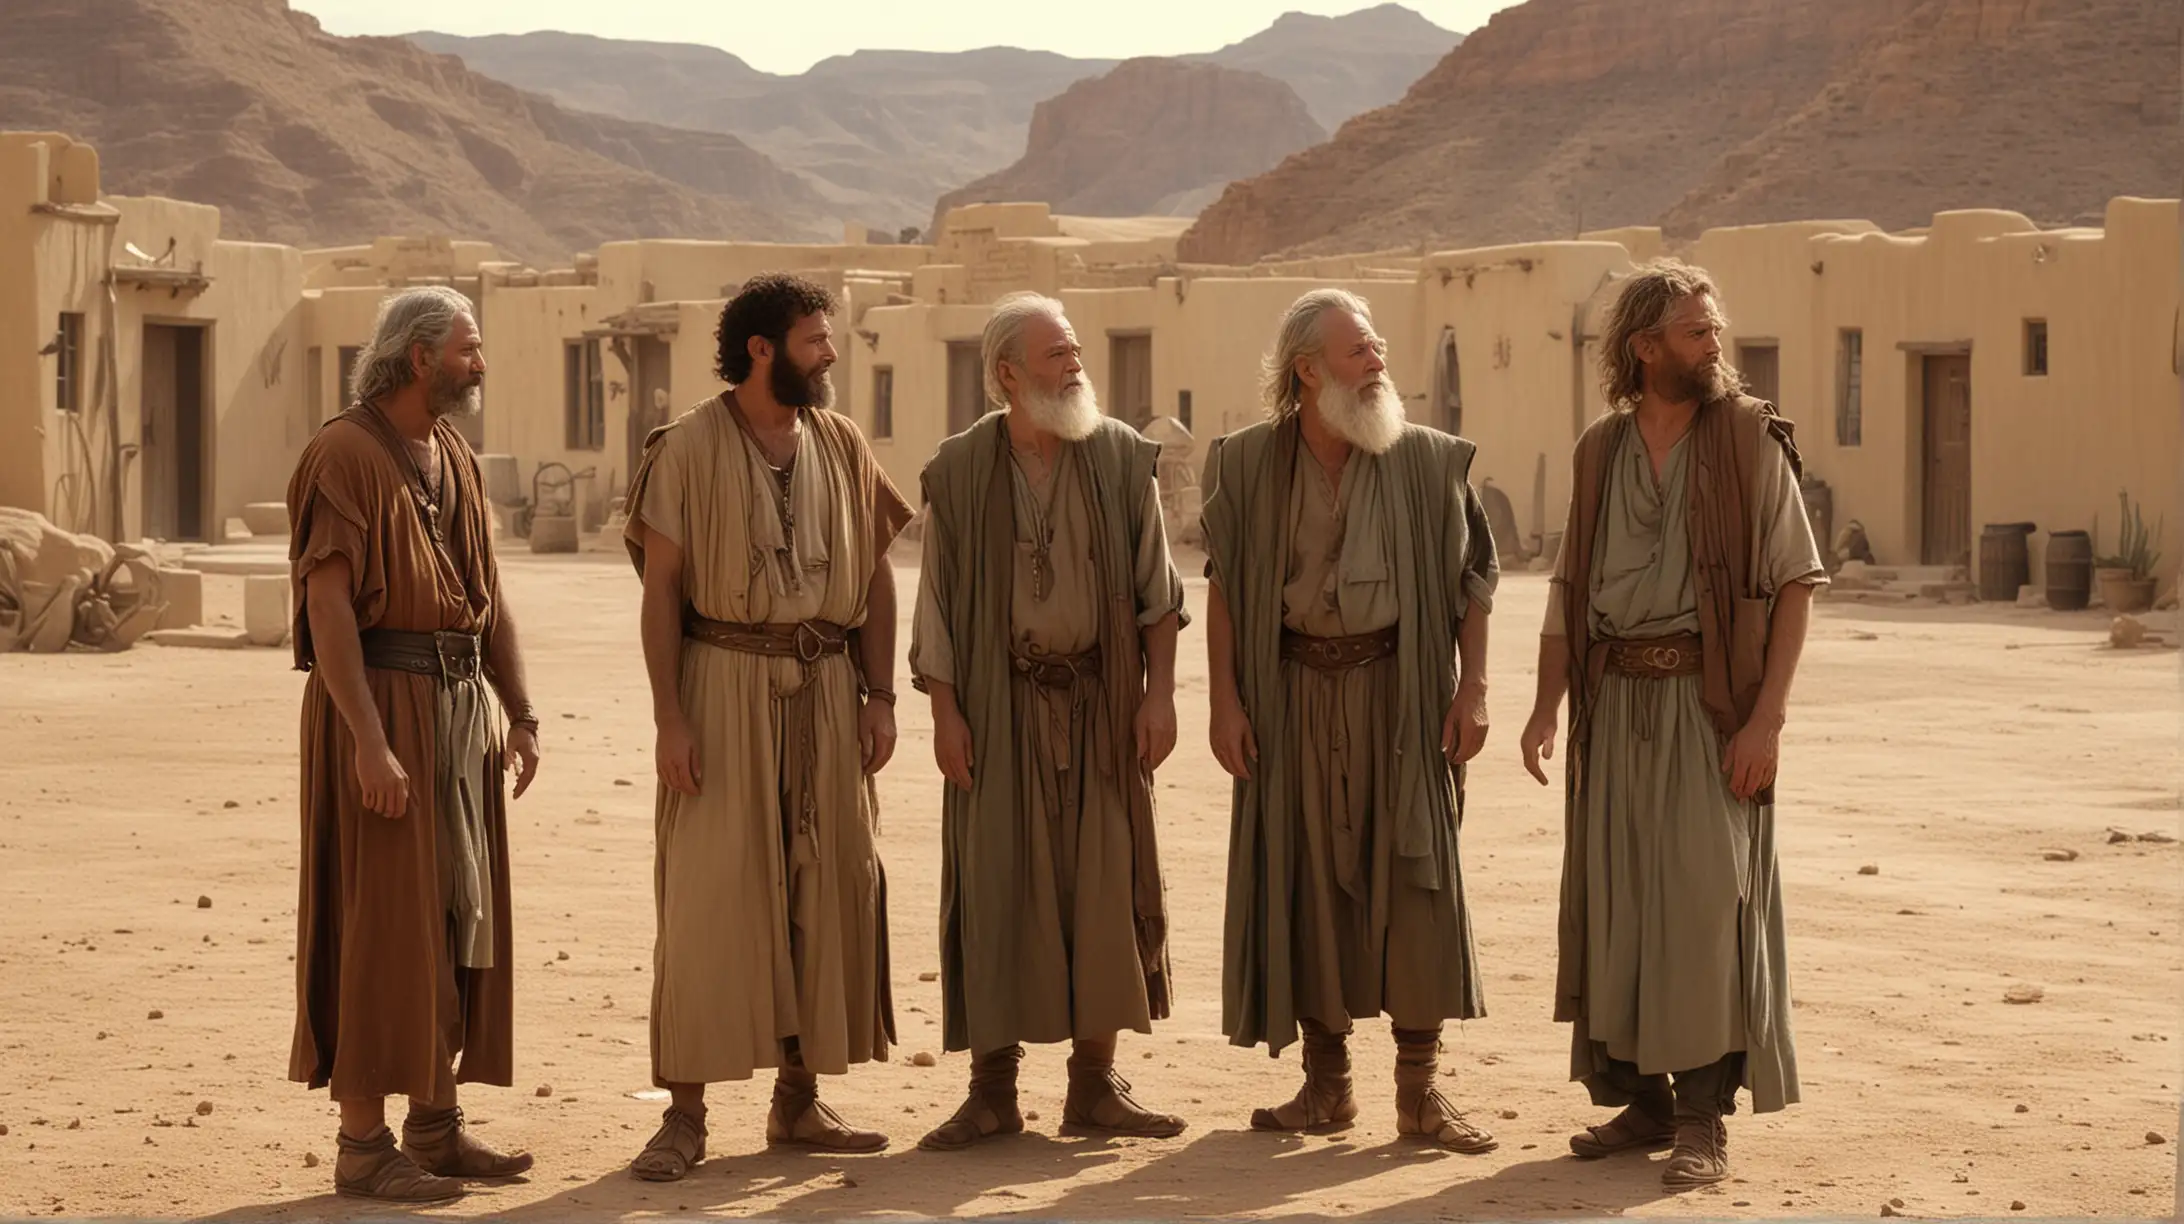 4 men talking in a desert town. Set during the Biblical Era of Moses.